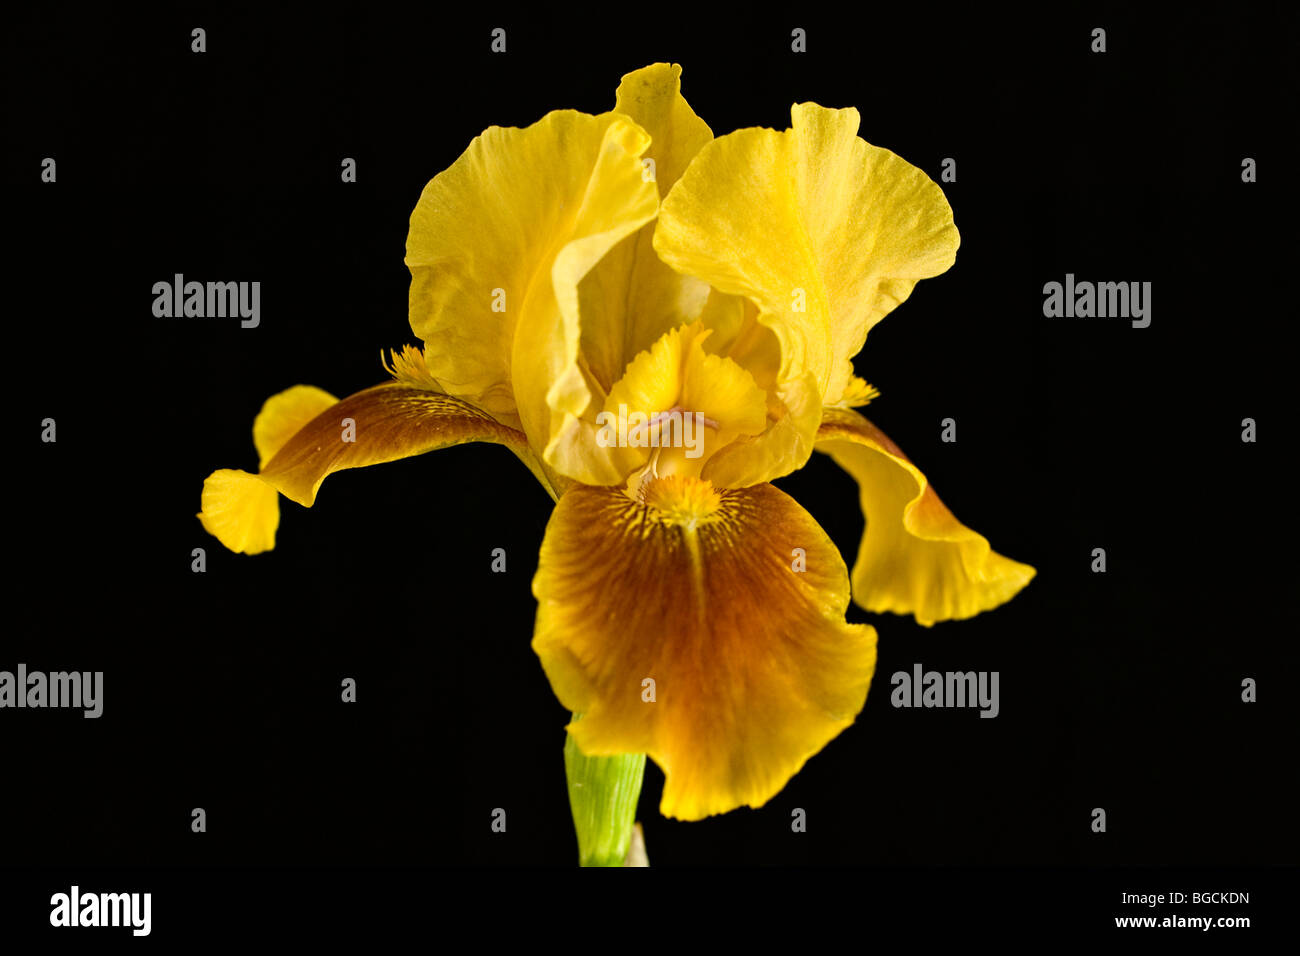 A yellow Iris flower in full bloom. Stock Photo